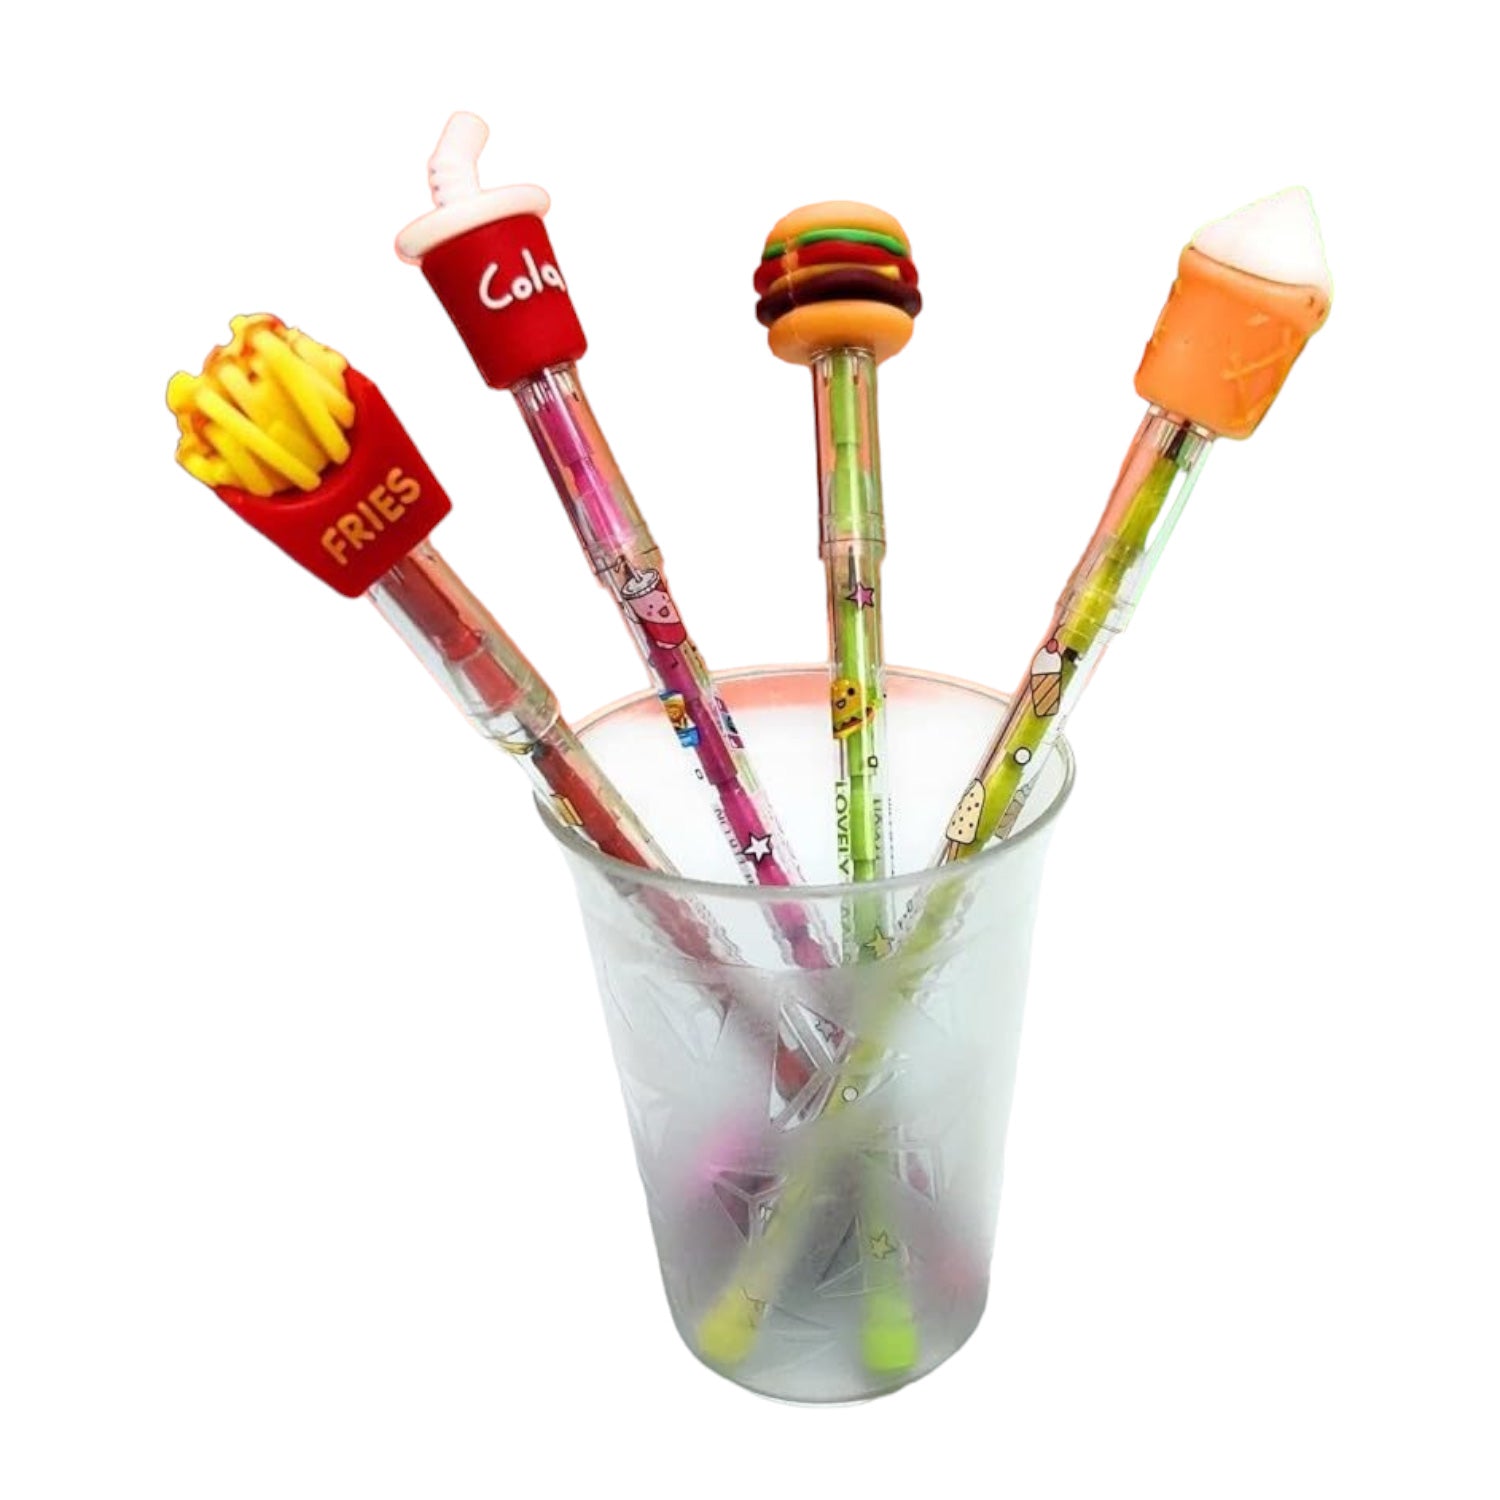 Lead Pencil | Mechanical Pencils For Writing, Sketching & Drawing (Unicron, Peppa & Mcdonald's Design) - for Students, Kids, Girls, Boys, School, Birthday Gift & Return Gifts - Apkamart